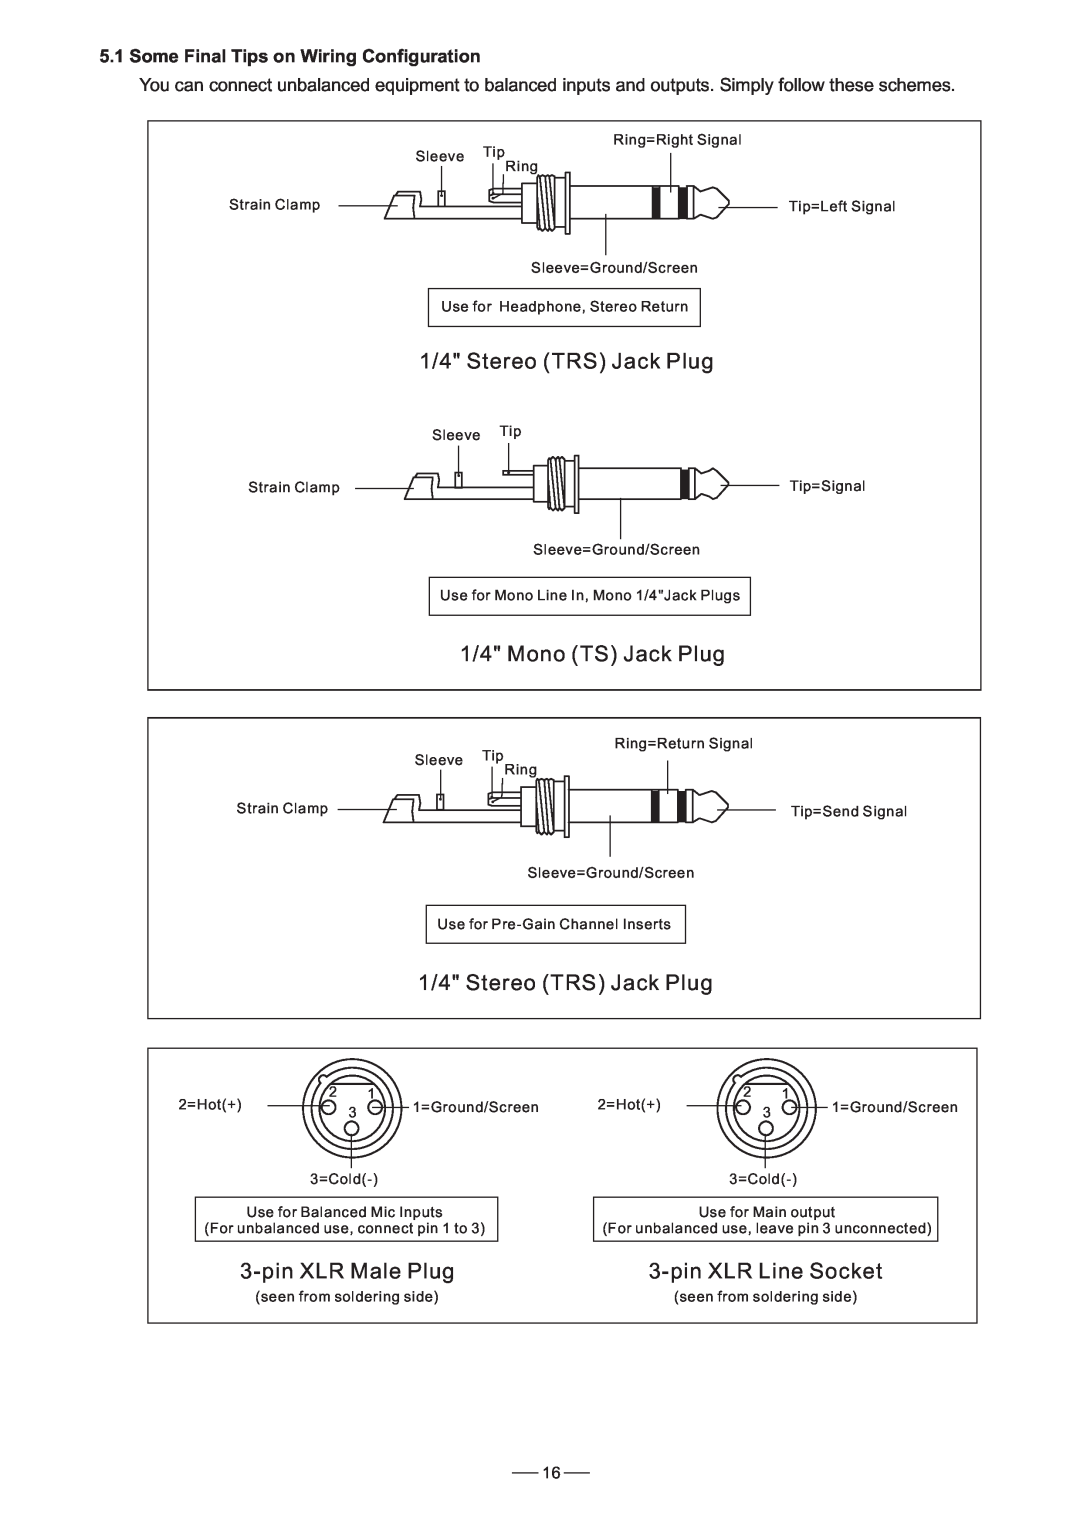 Humminbird AMX-220FX 1/4 Stereo TRS Jack Plug, 1/4 Mono TS Jack Plug, pin XLR Male Plug, pin XLR Line Socket, Sleeve Tip 